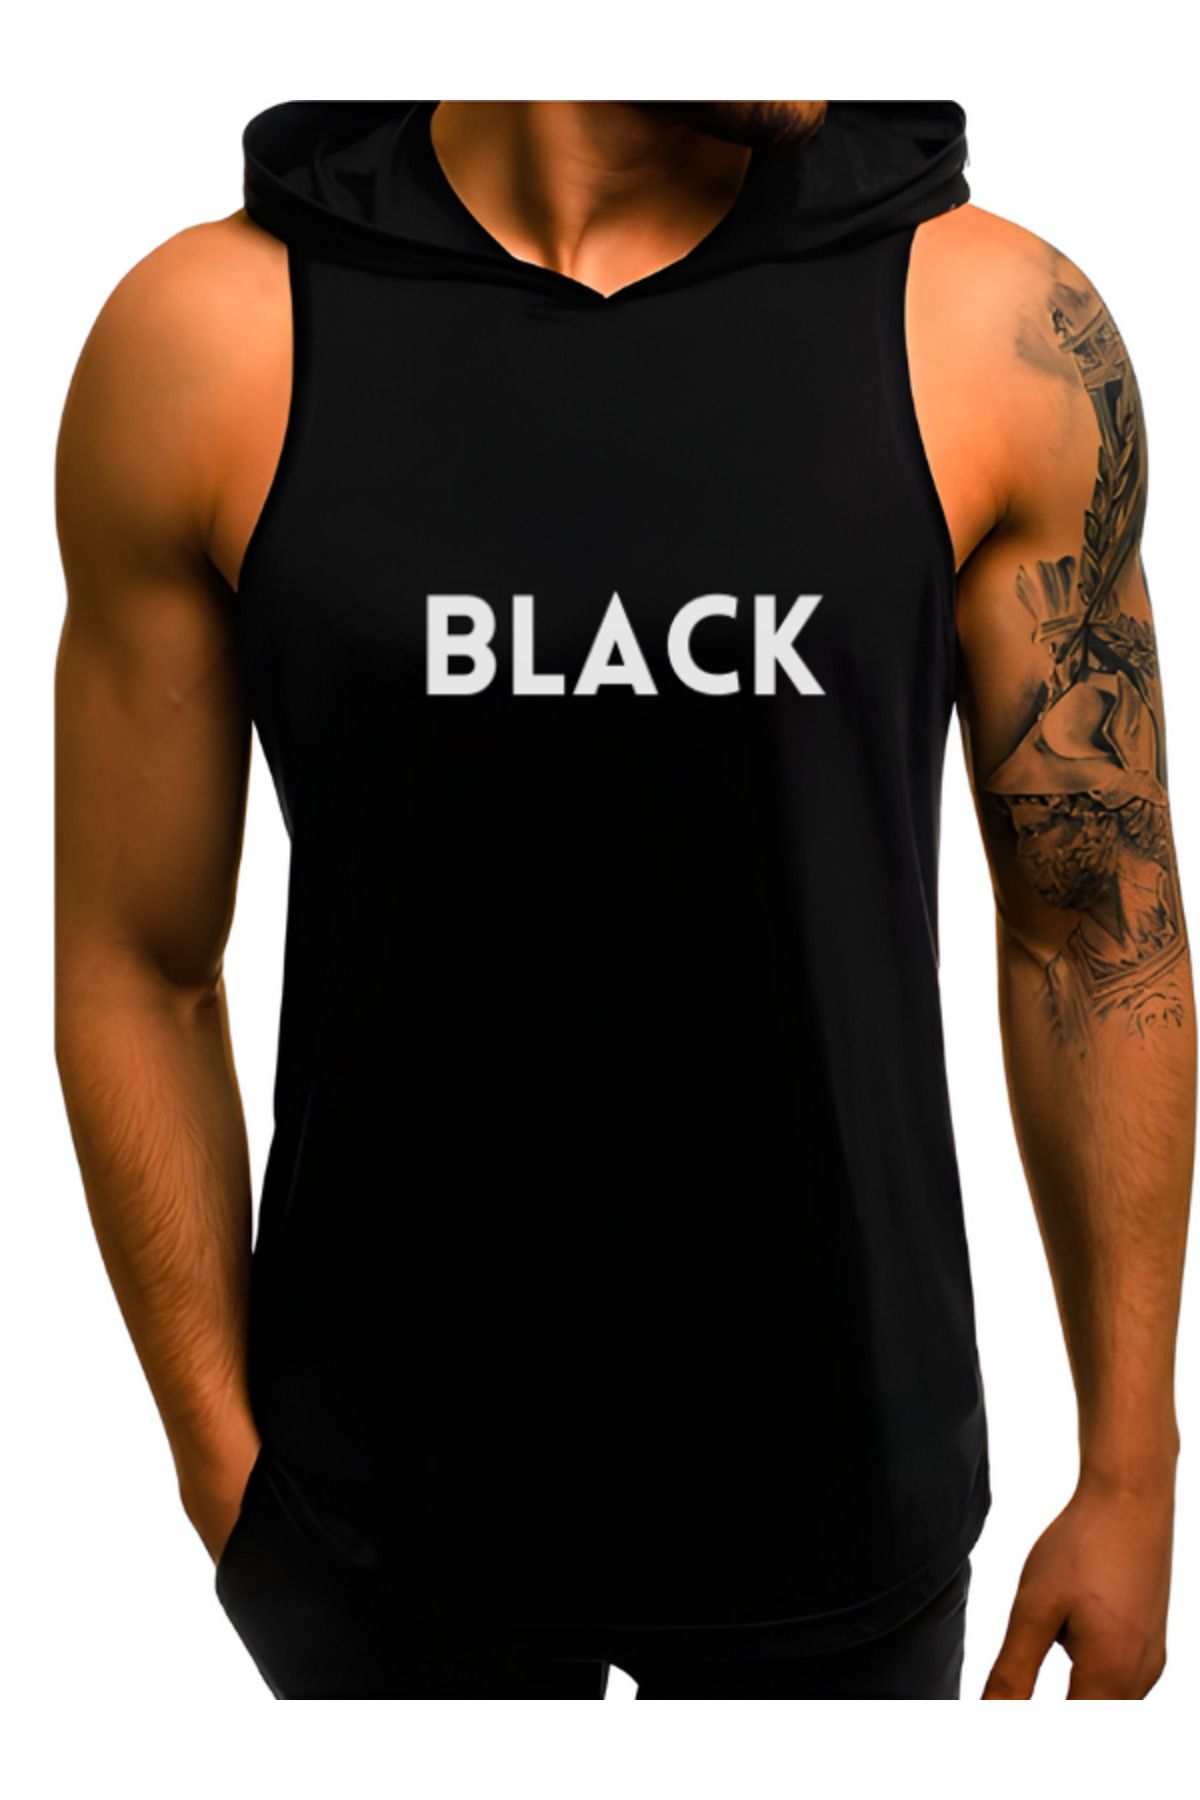 TREND ALİSSE Kapşonlu Spor Atlet - Black Baskılı Fitness Gym Spor Atleti